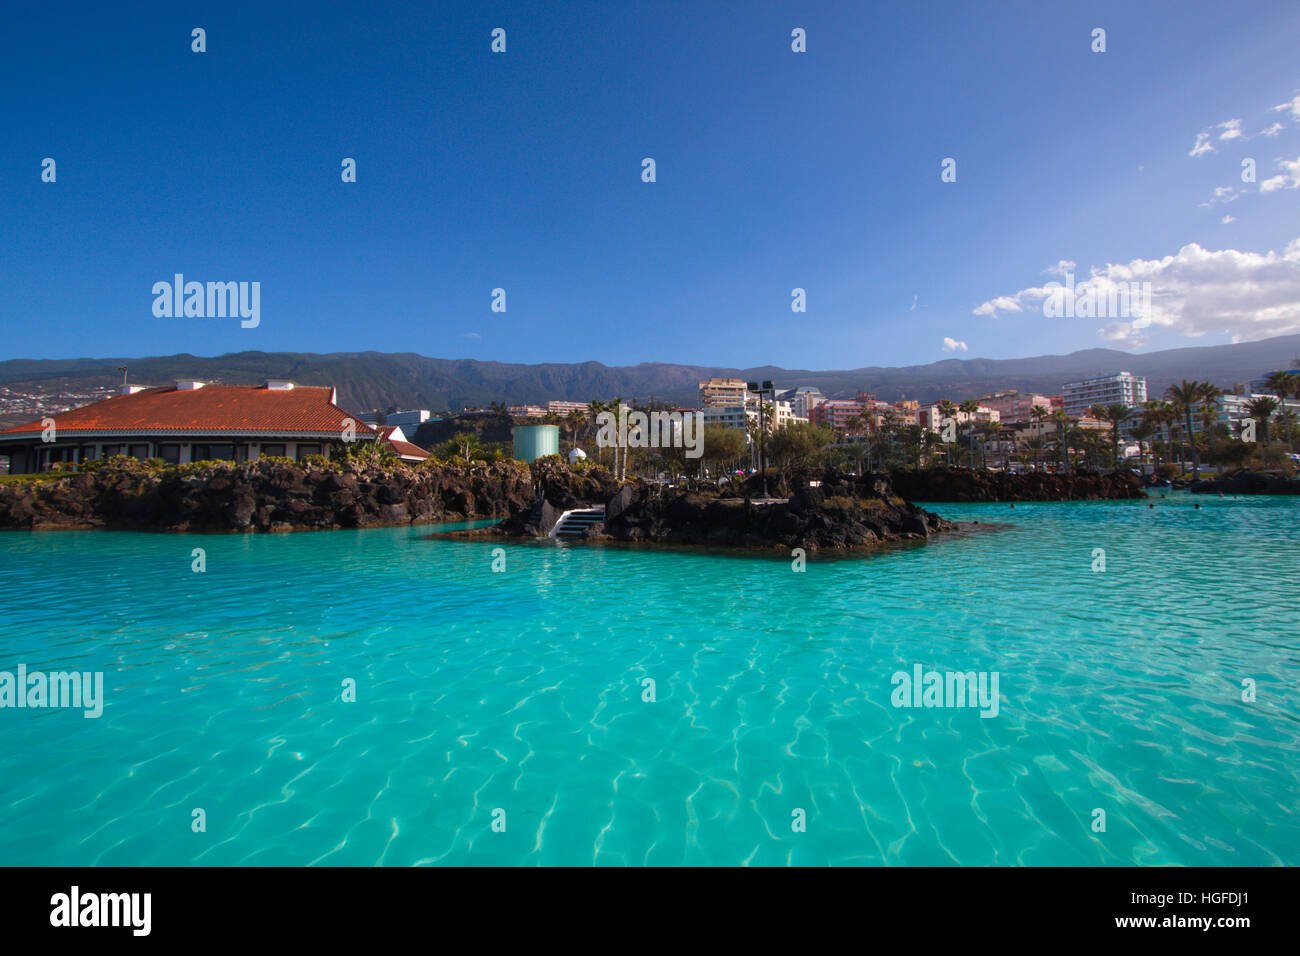 Puerto de la Cruz, Lago Martianez, Swimming pool Stock Photo